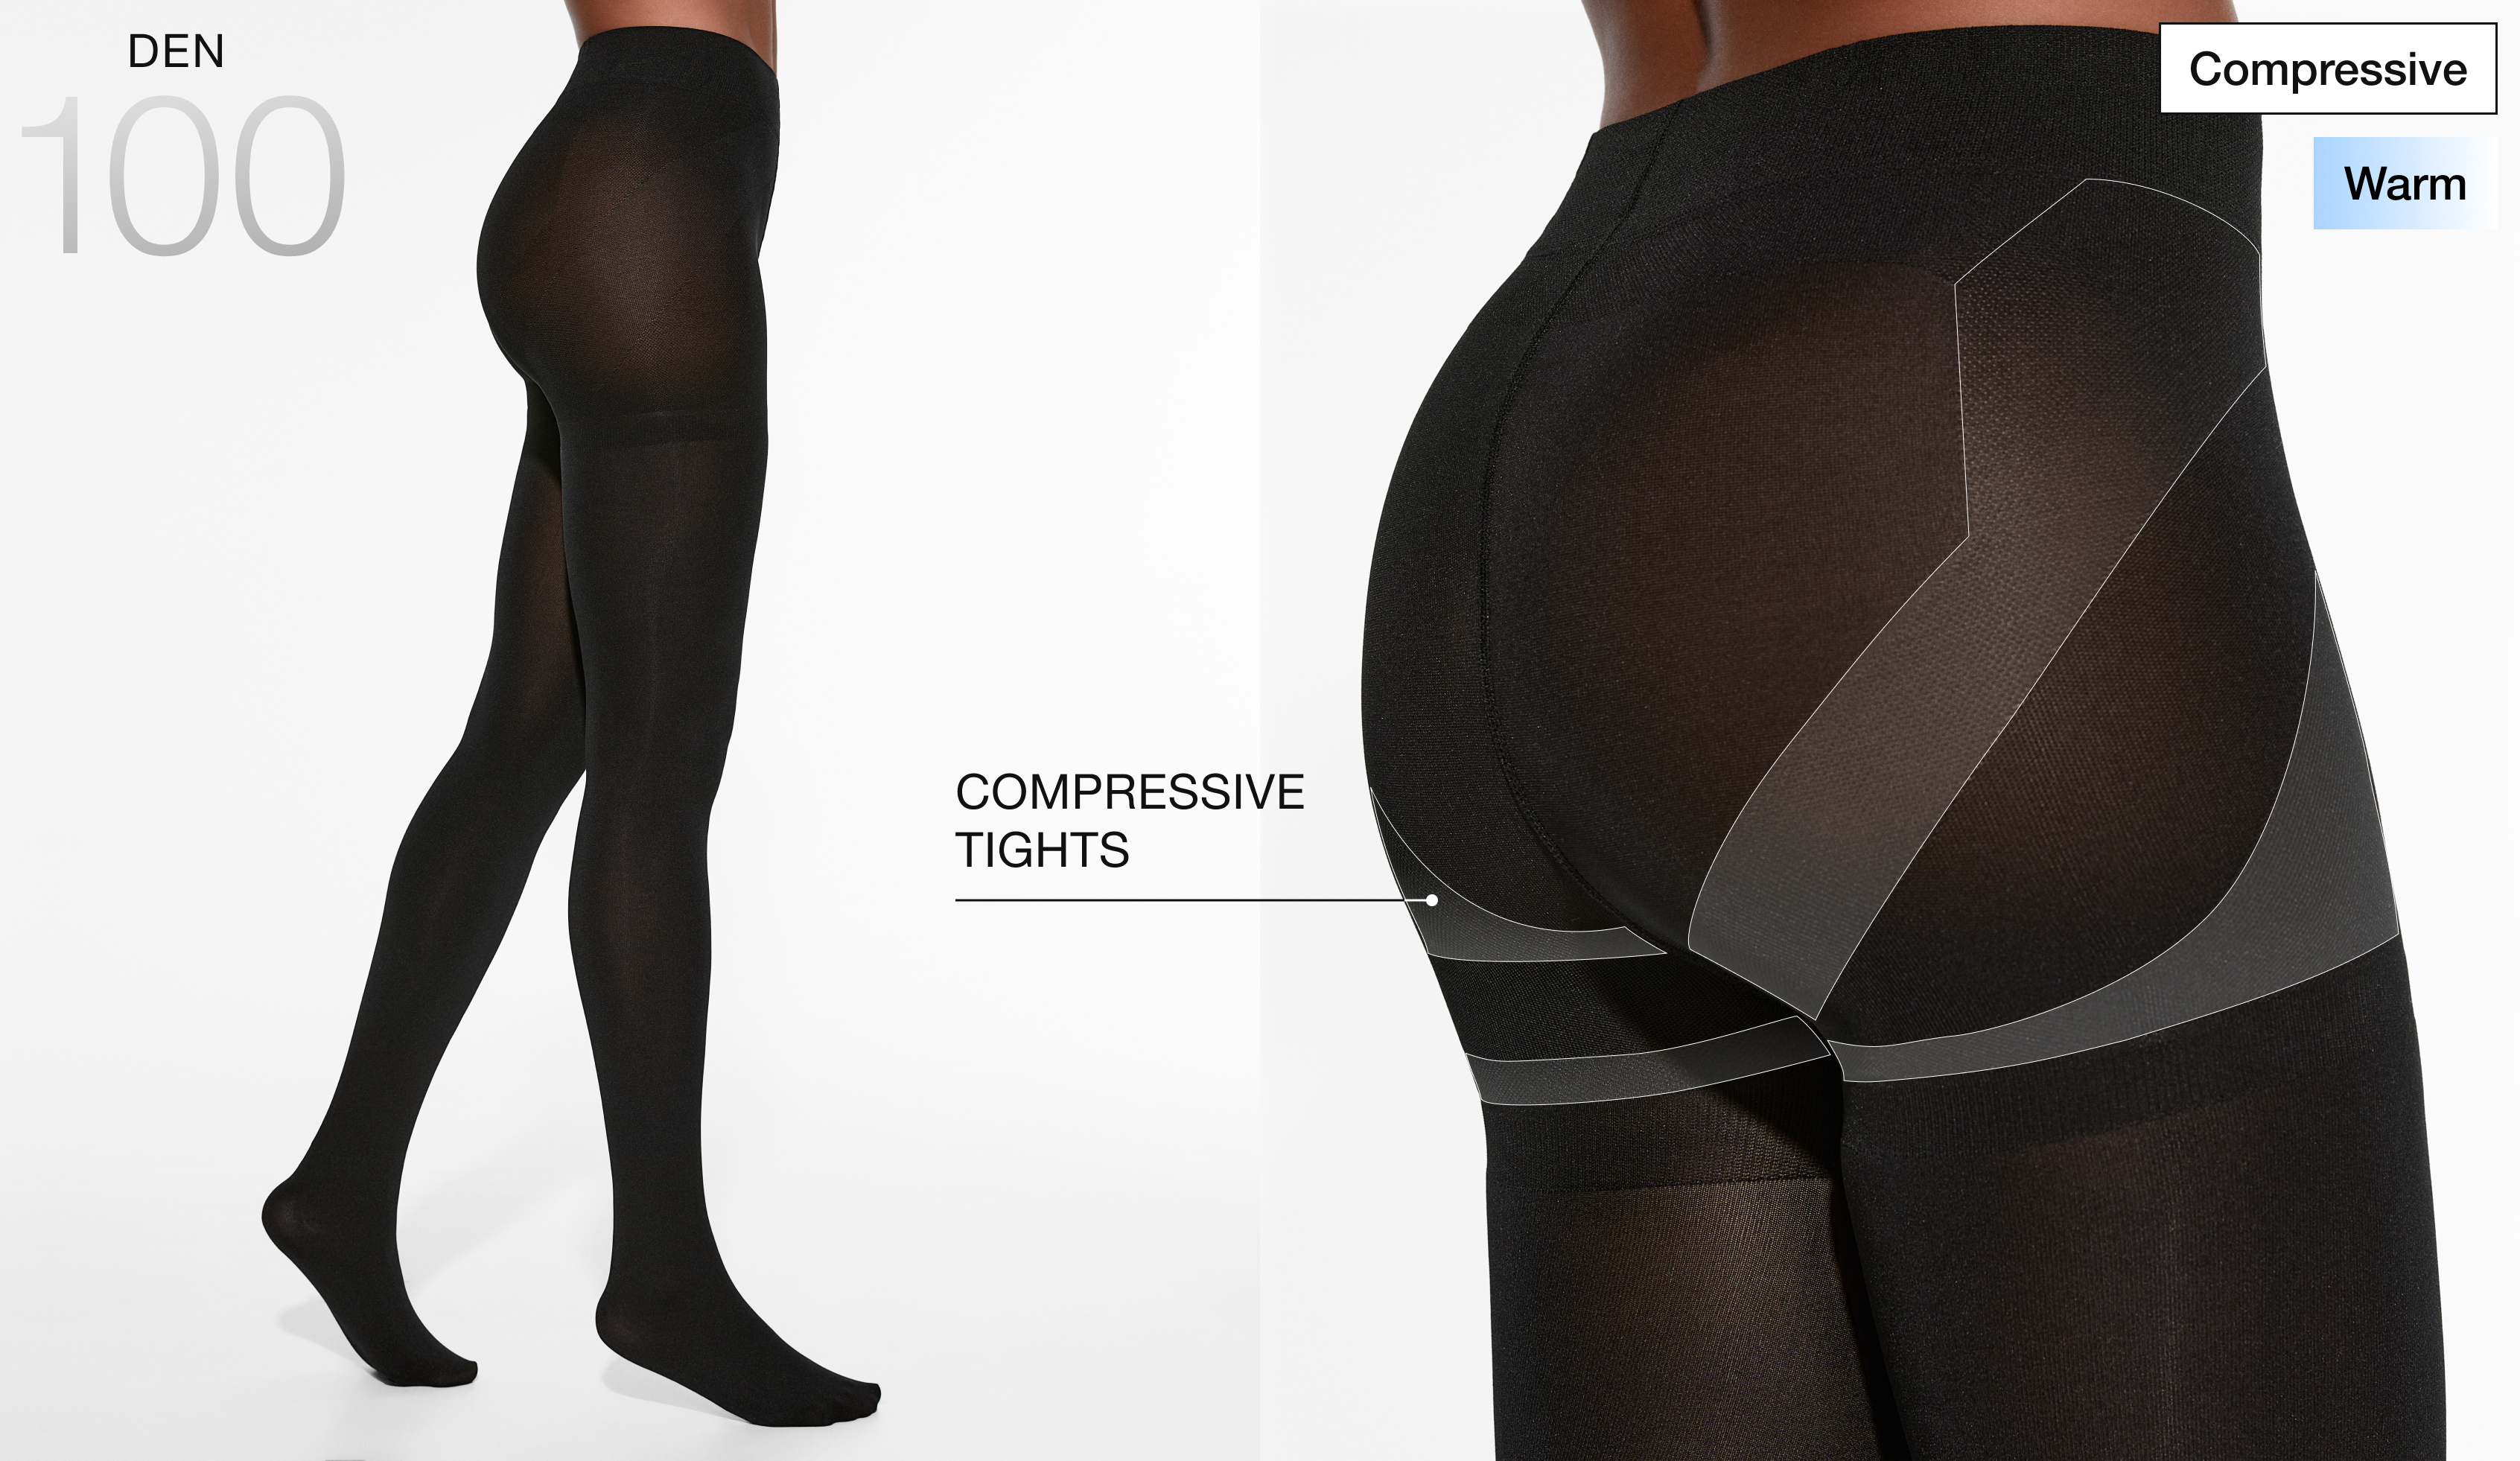 Ultra-opaque 100 denier warm compressive tights